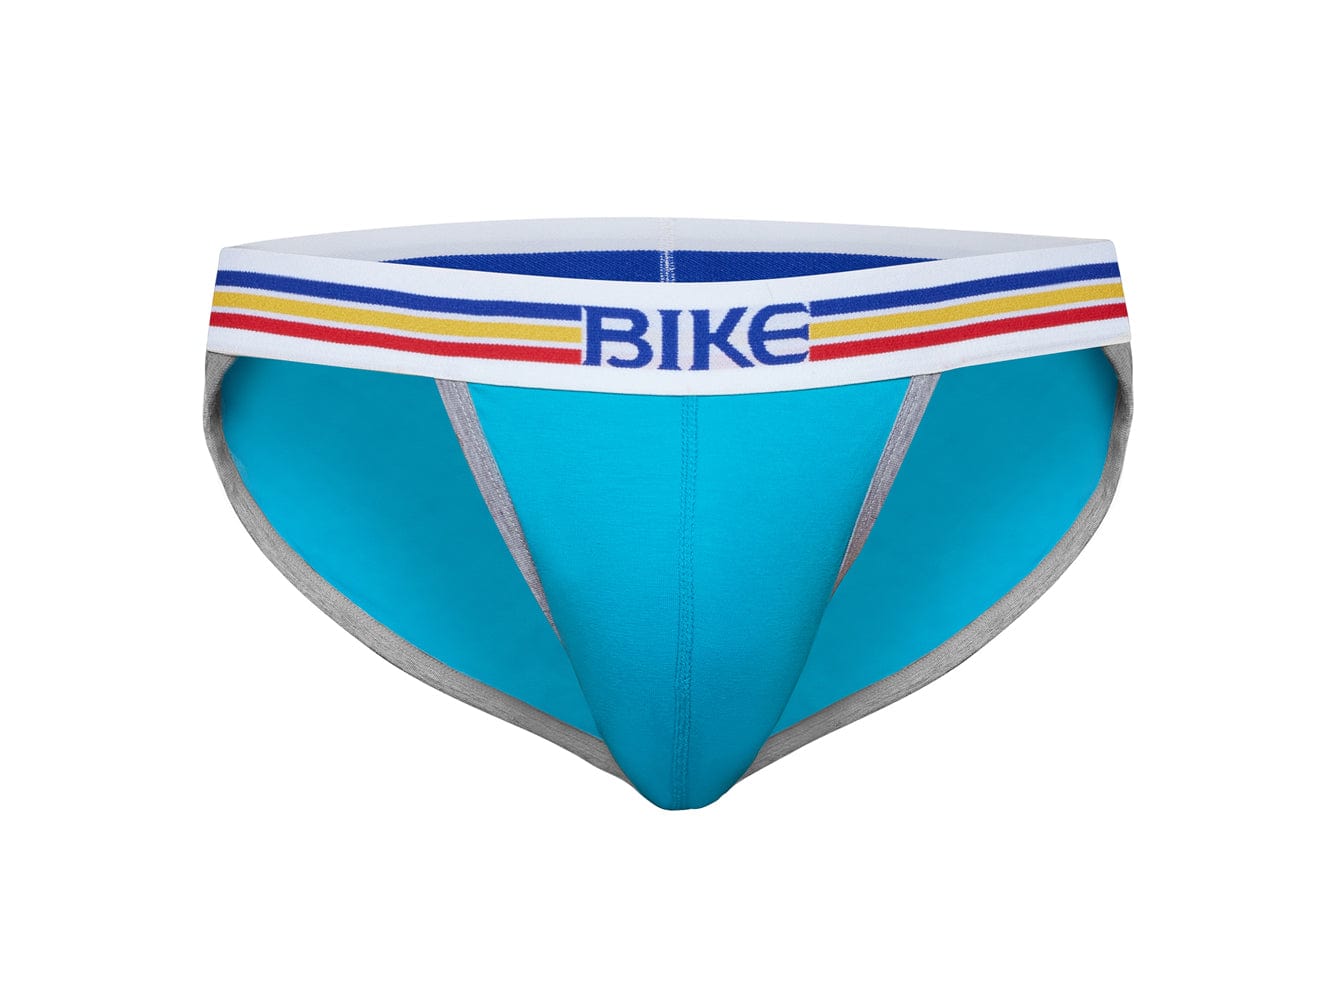 Authentic Bike Hard Cup Supporters – Jockstrap Central has them! –  Underwear News Briefs